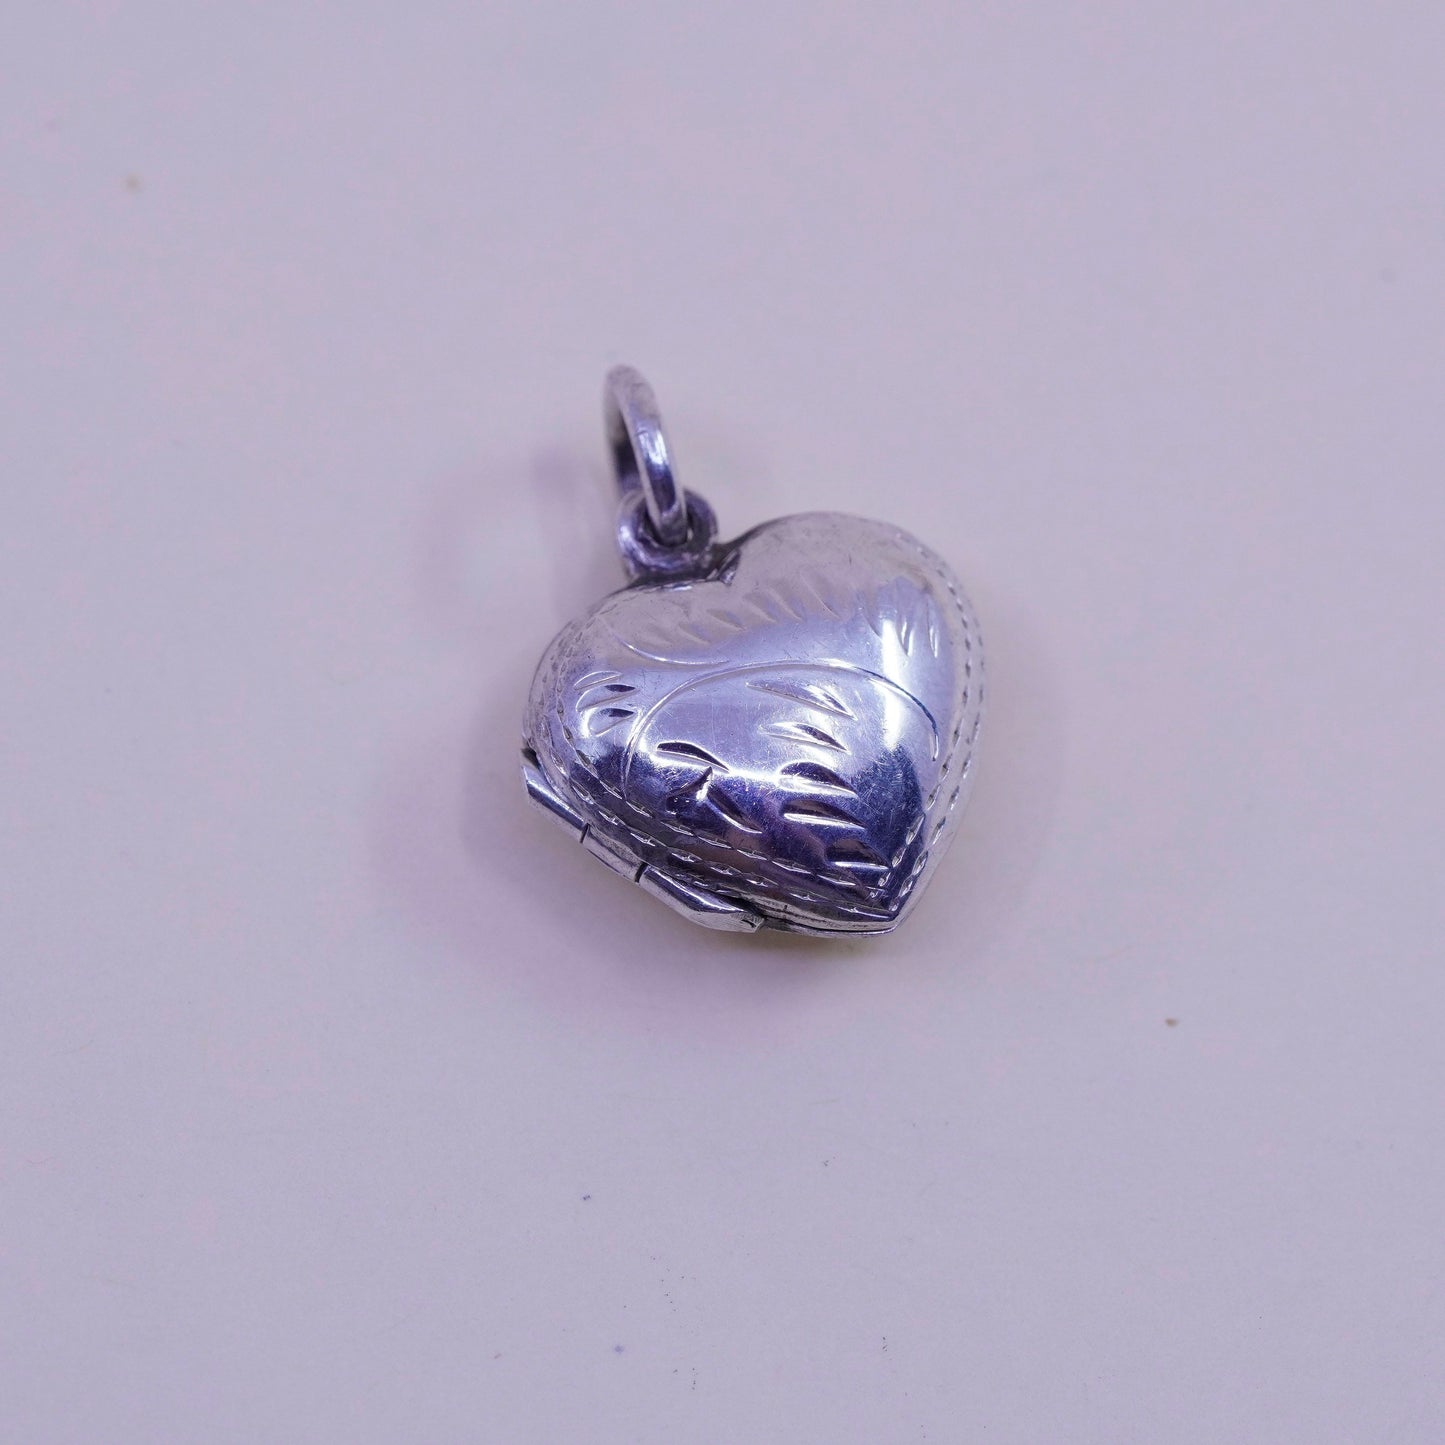 Vintage Sterling silver pendant, 925 textured handmade heart photo locket charm